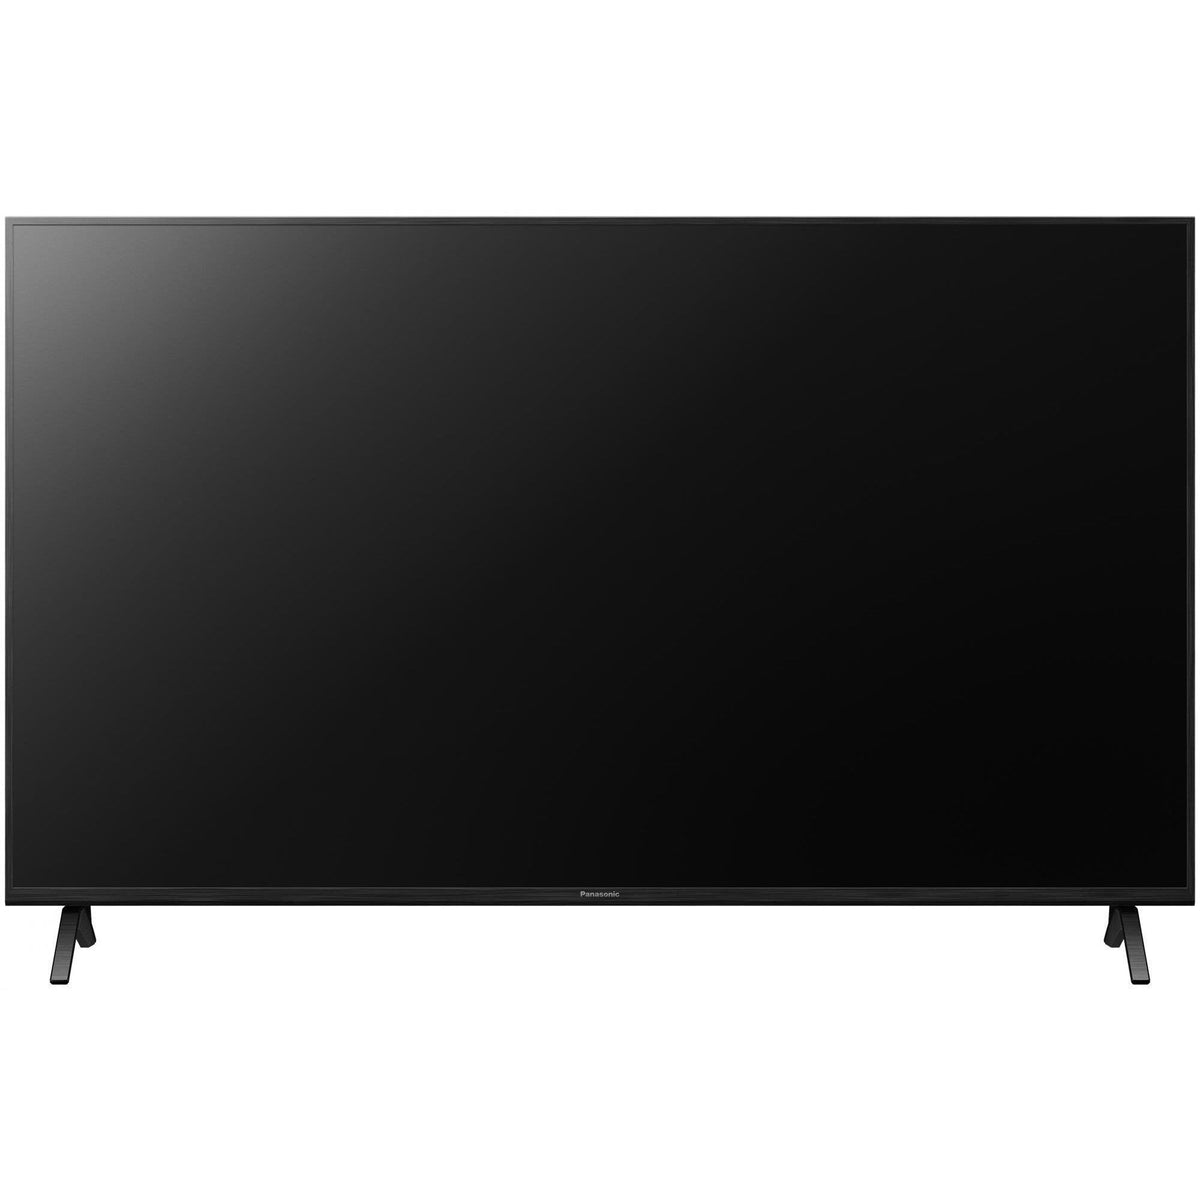 Smart televízor Panasonic TX-55HX940E (2020) / 55&quot; (139 cm)